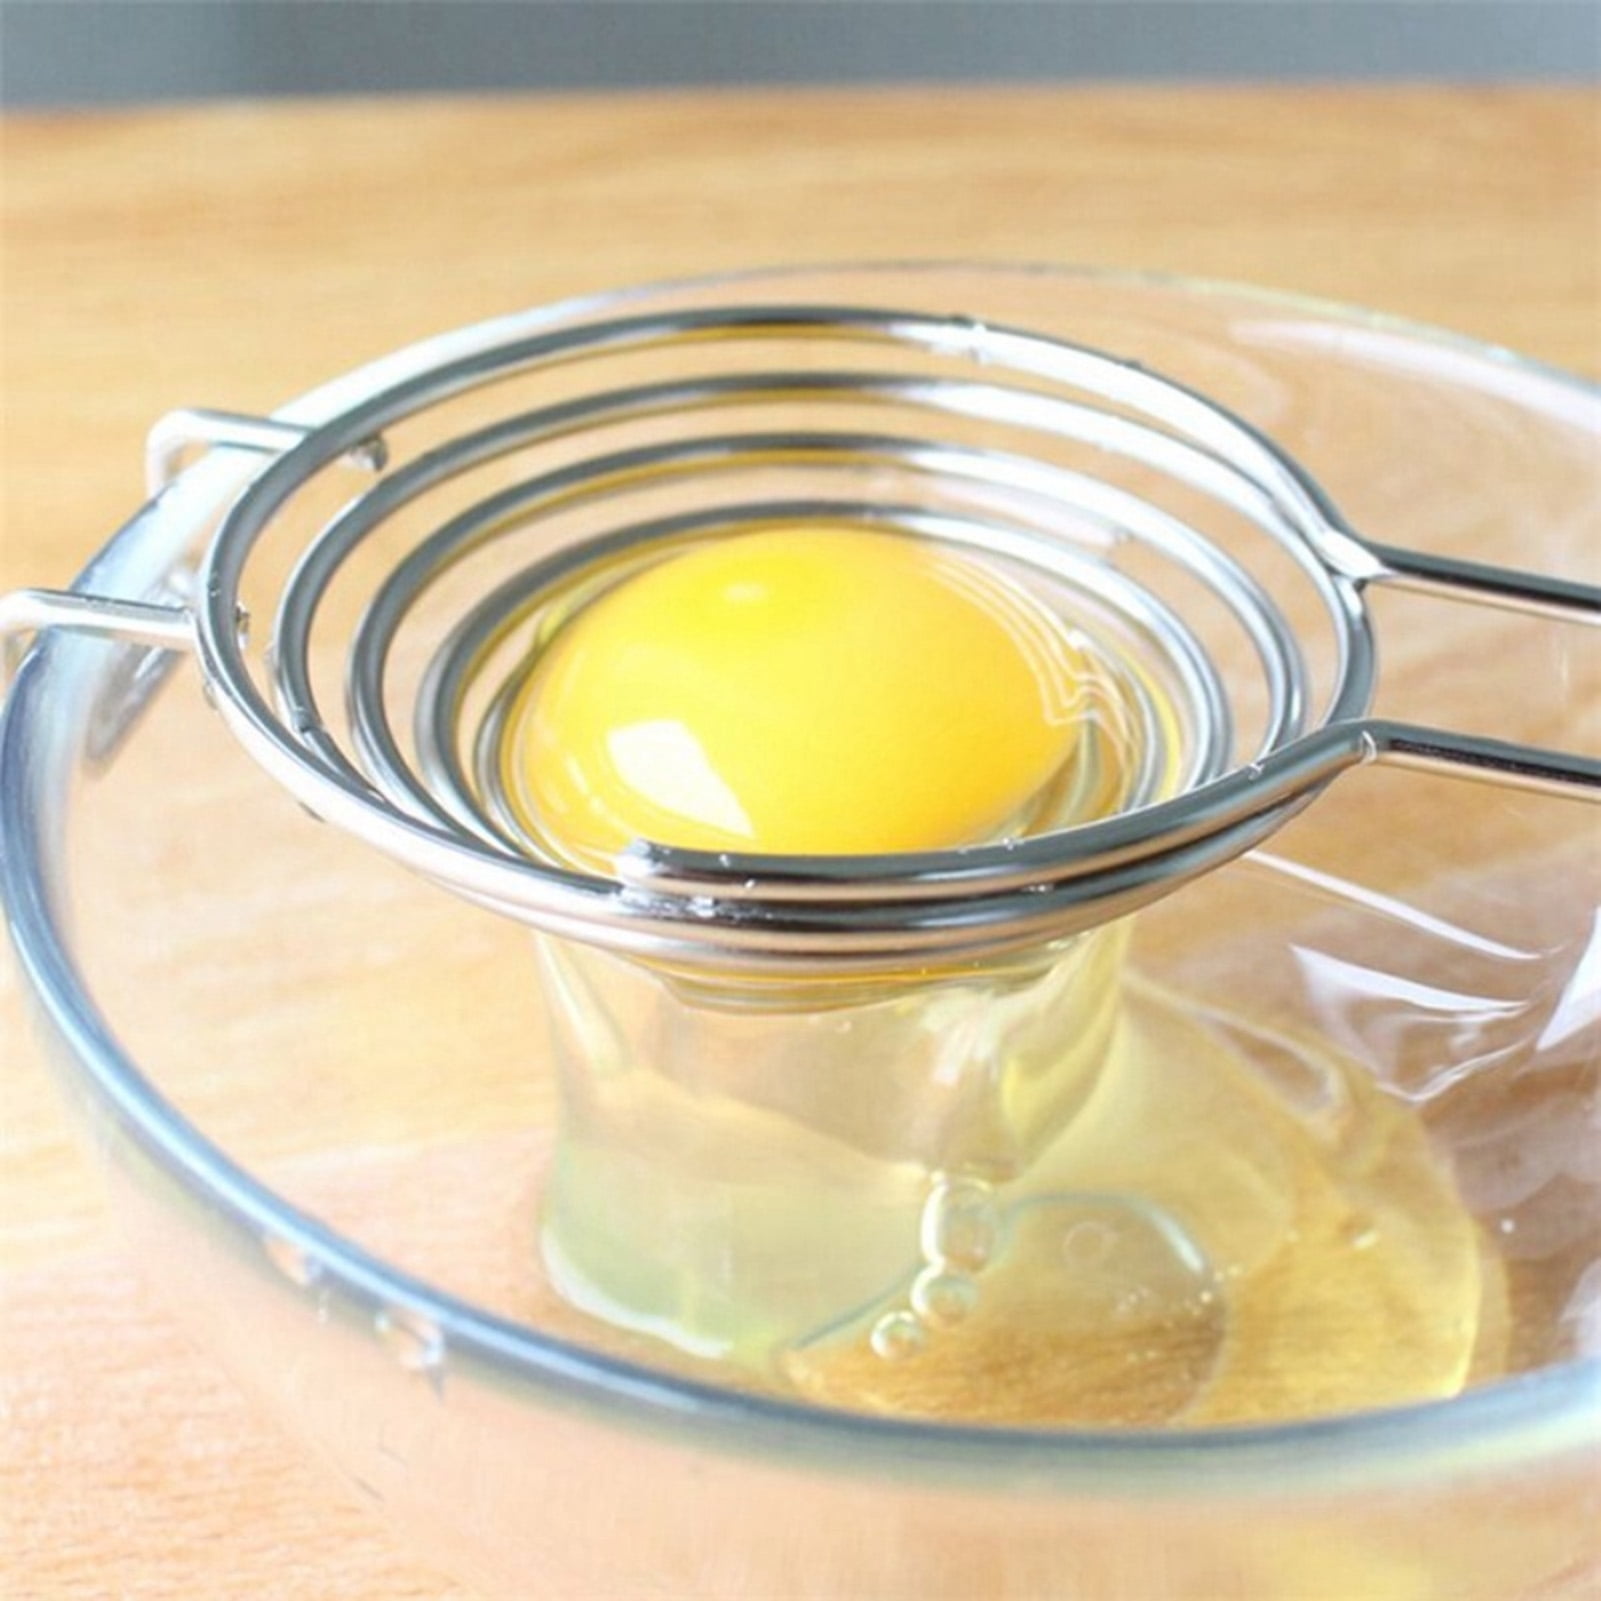 1 Pcs Egg Yolk Separator Protein Separation Divider Tool Food